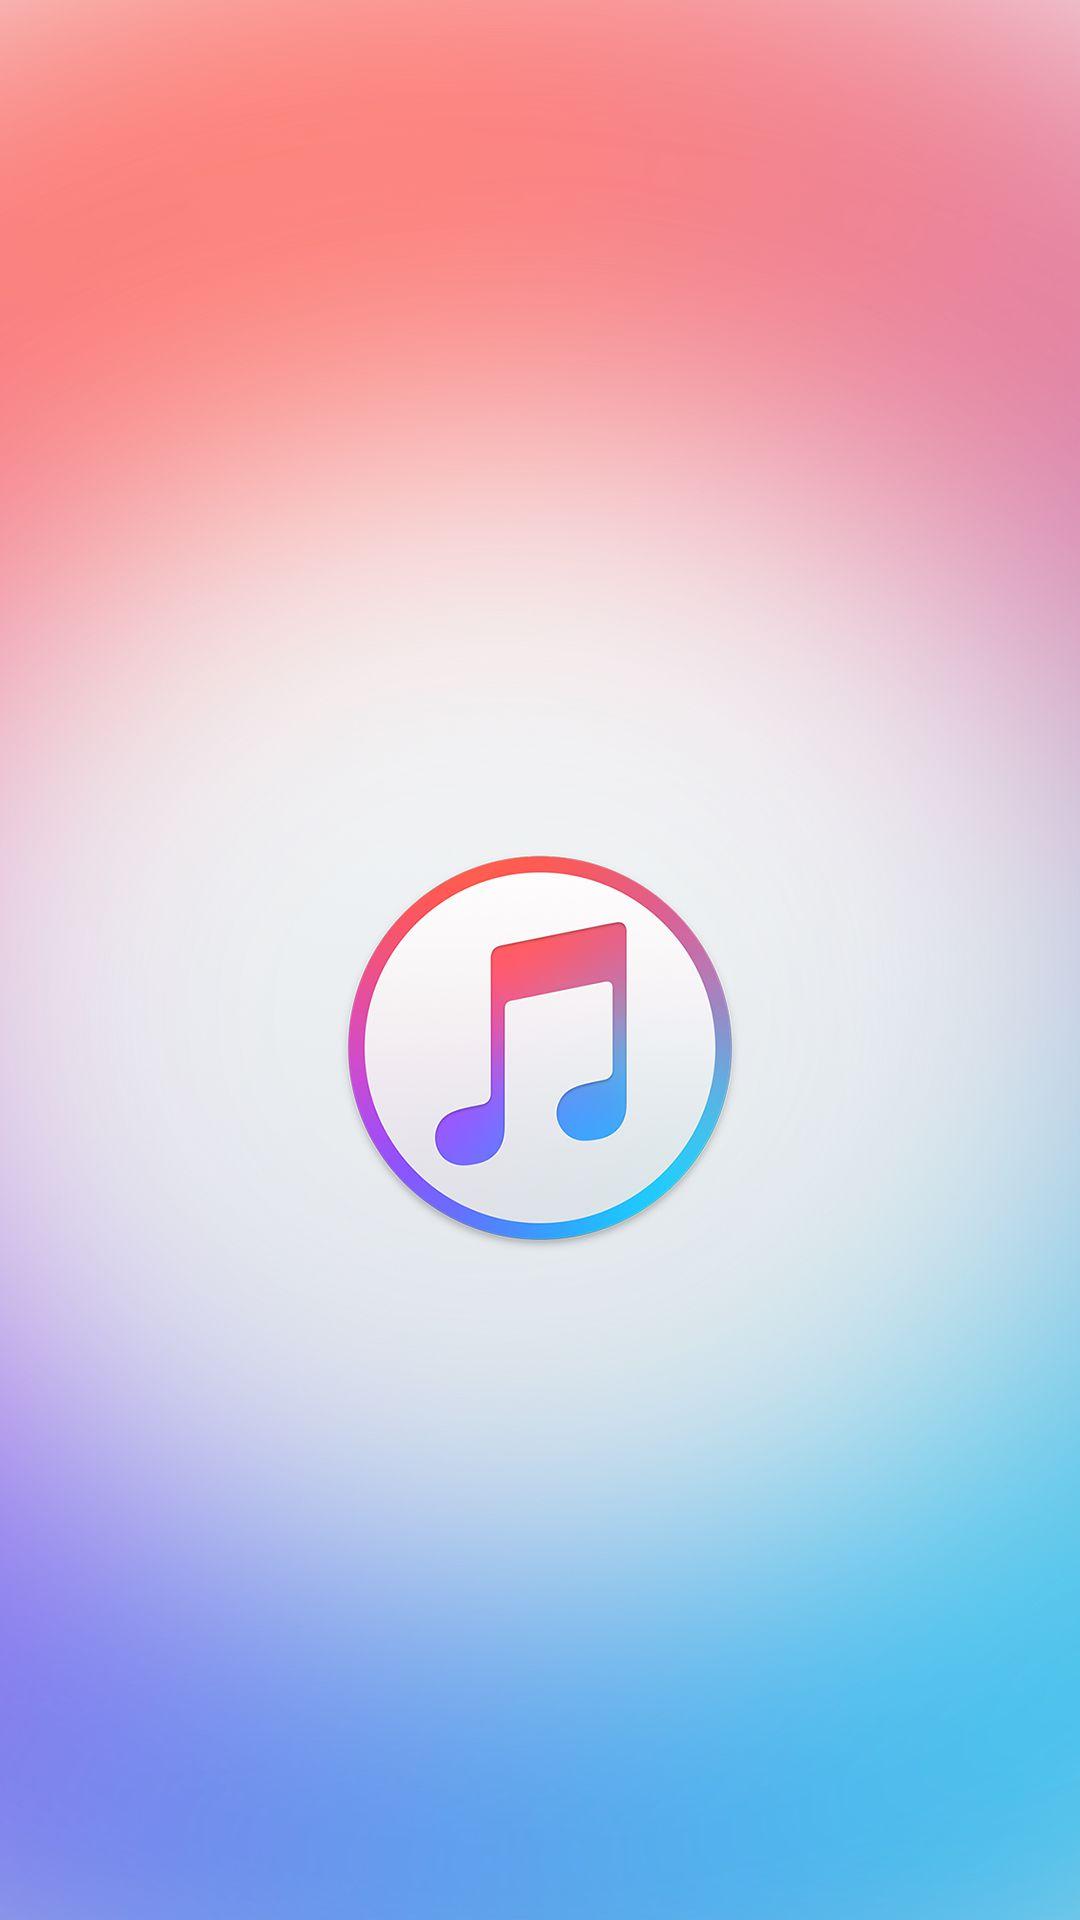 Music iPhone Wallpaper For Music Manias. Apple logo wallpaper